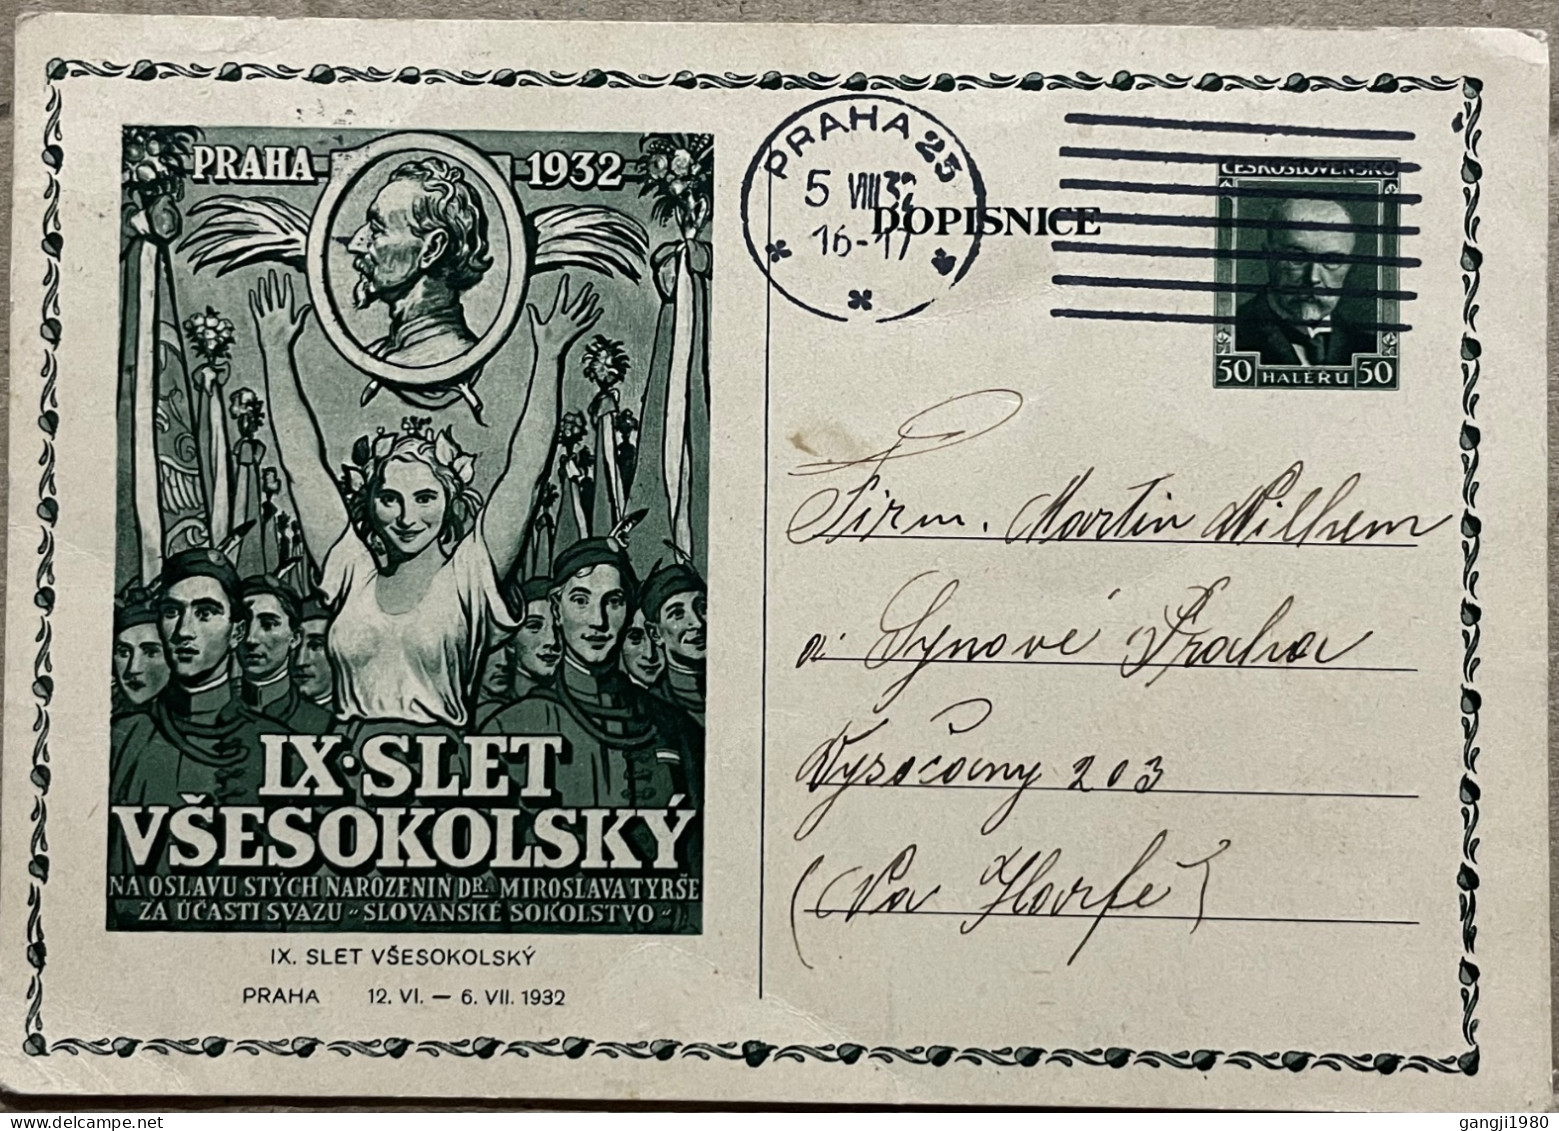 CZECHOSLOVAKIA 1932, STATIONERY CARD USED, ILLUSTRATE, WOMAN, CHARMING LADY, SLET YSESOKOLSKY, PRAHA CITY CANCEL - Lettres & Documents